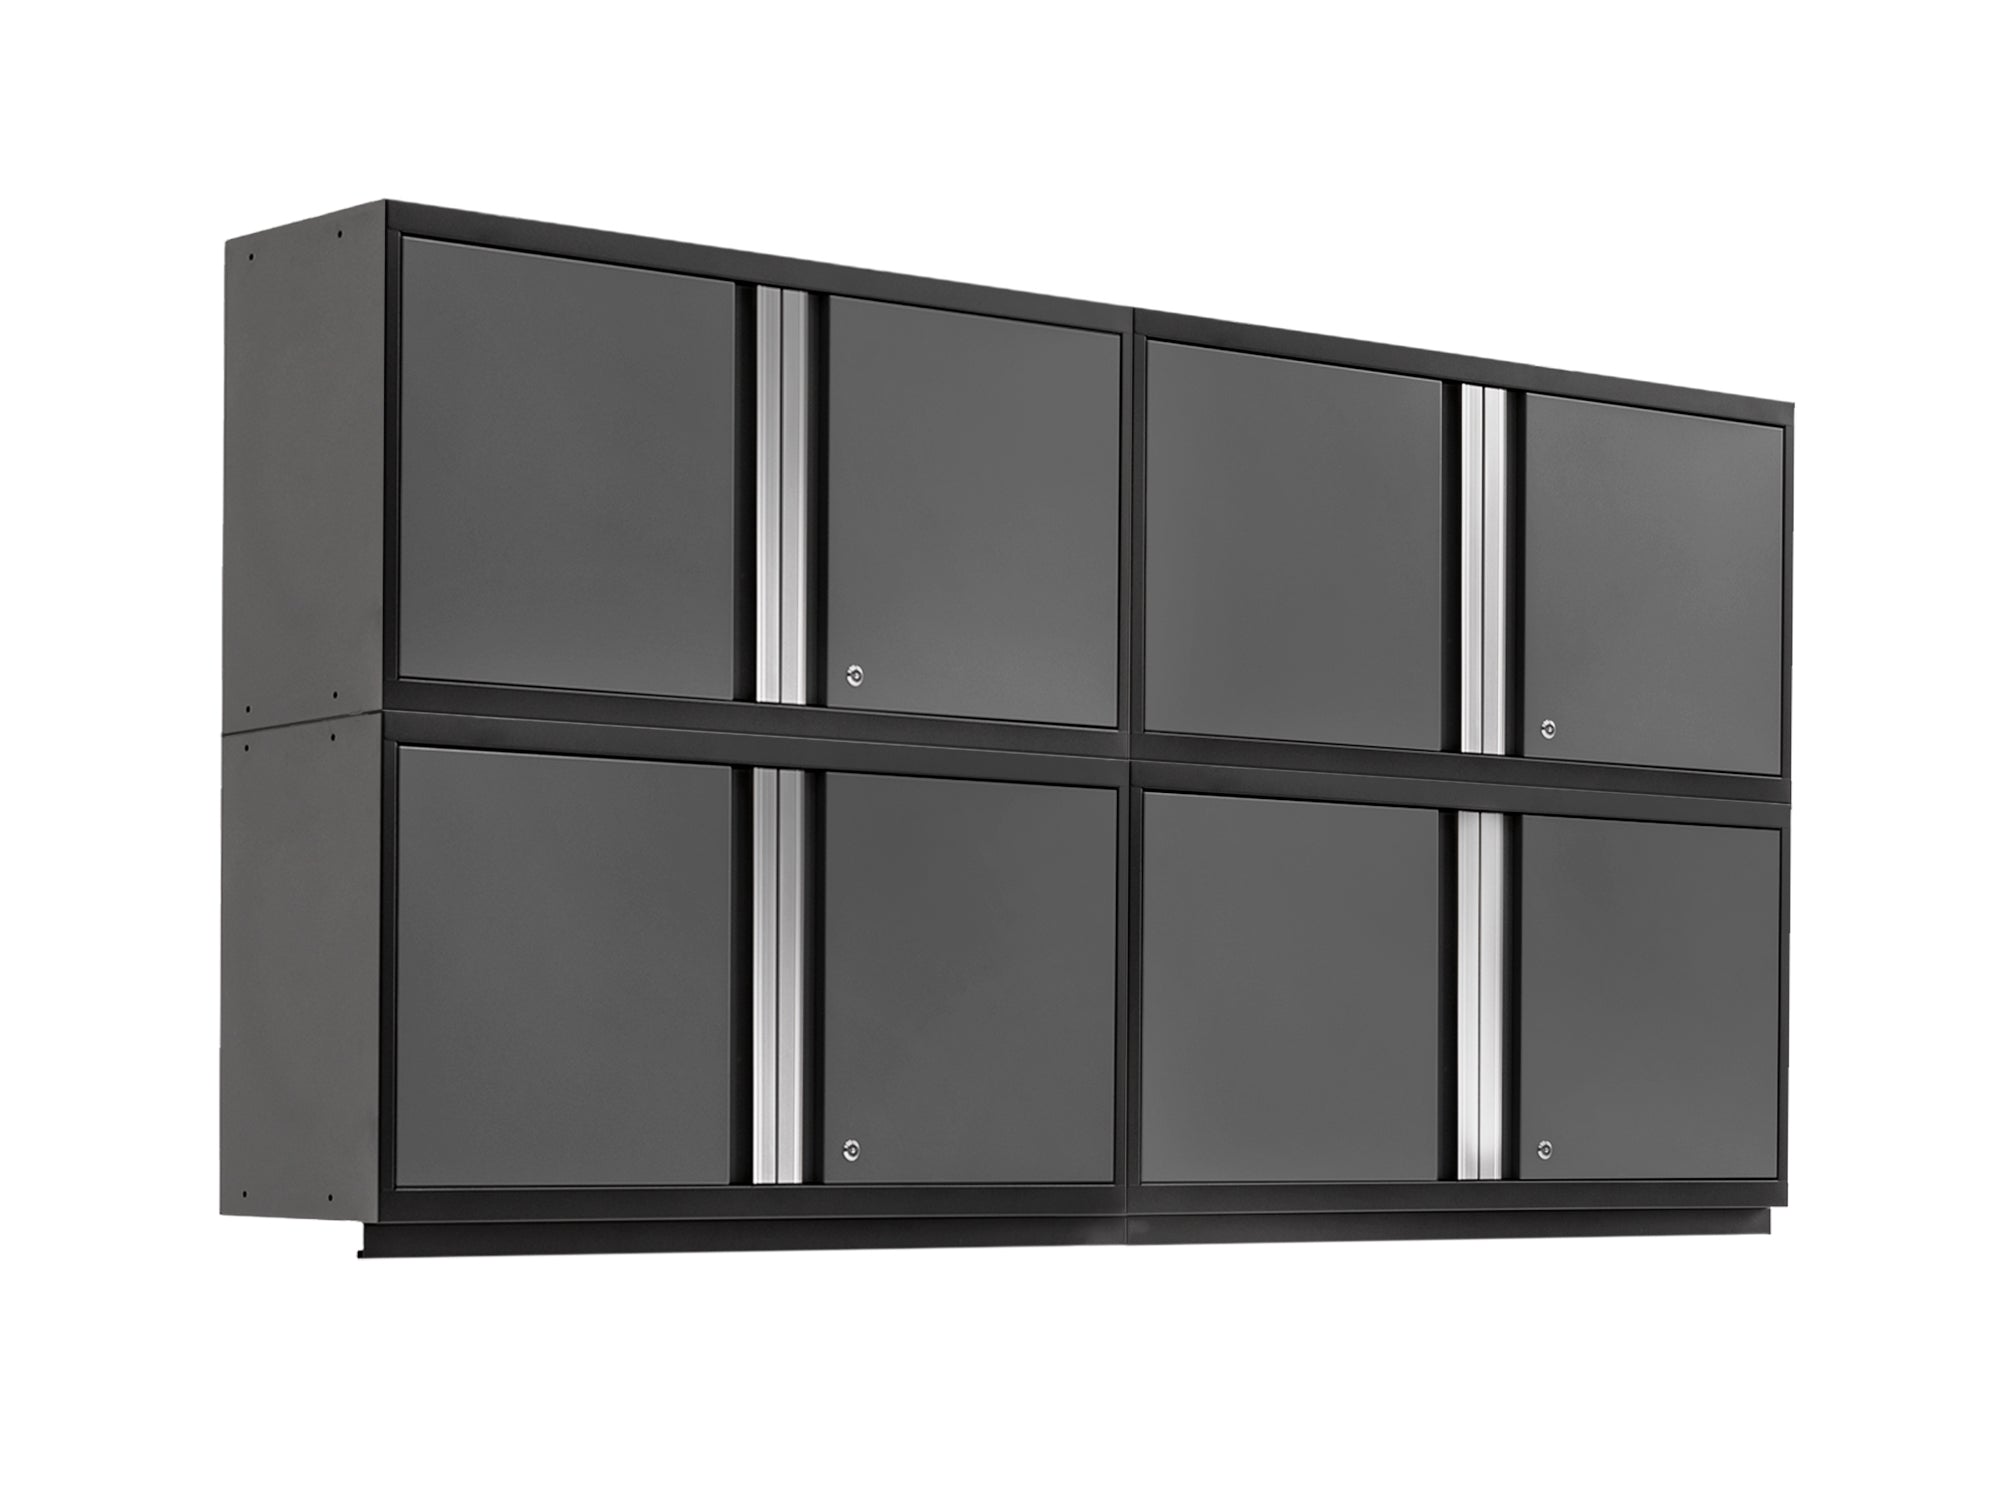 NewAge Pro Series 4 Piece Cabinet Set